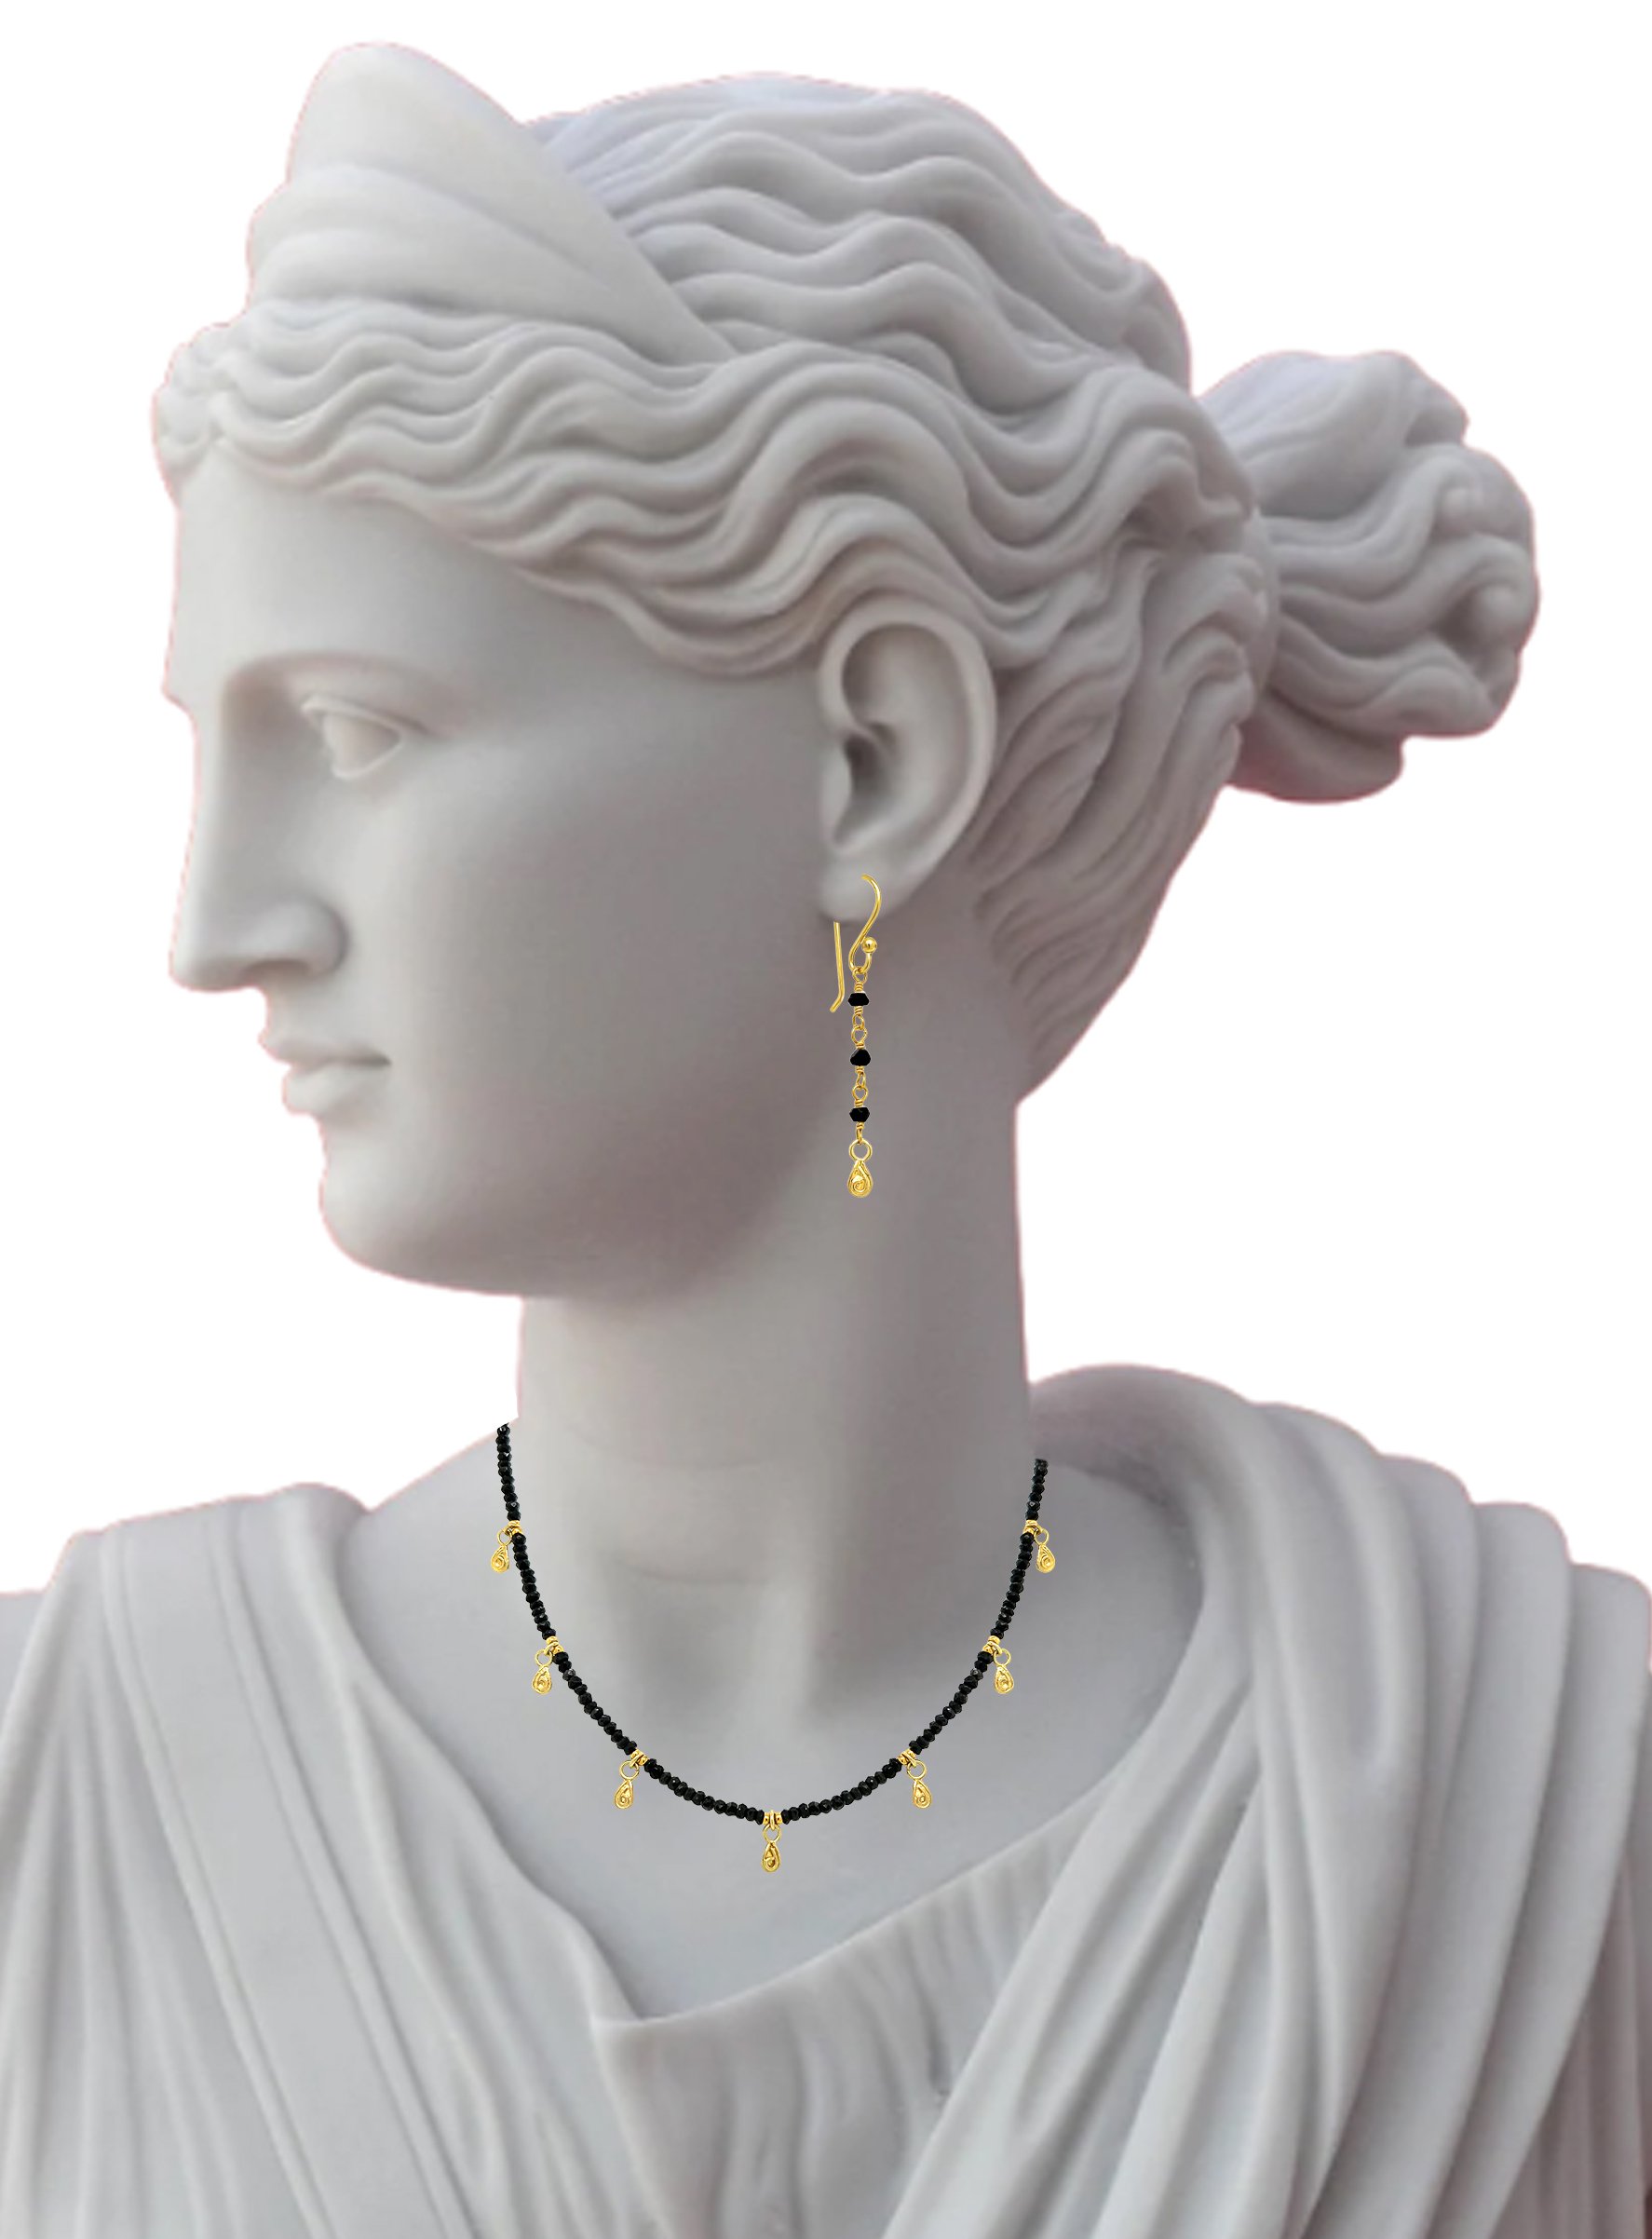 black fernlets on Diana of Versailles copy.jpg